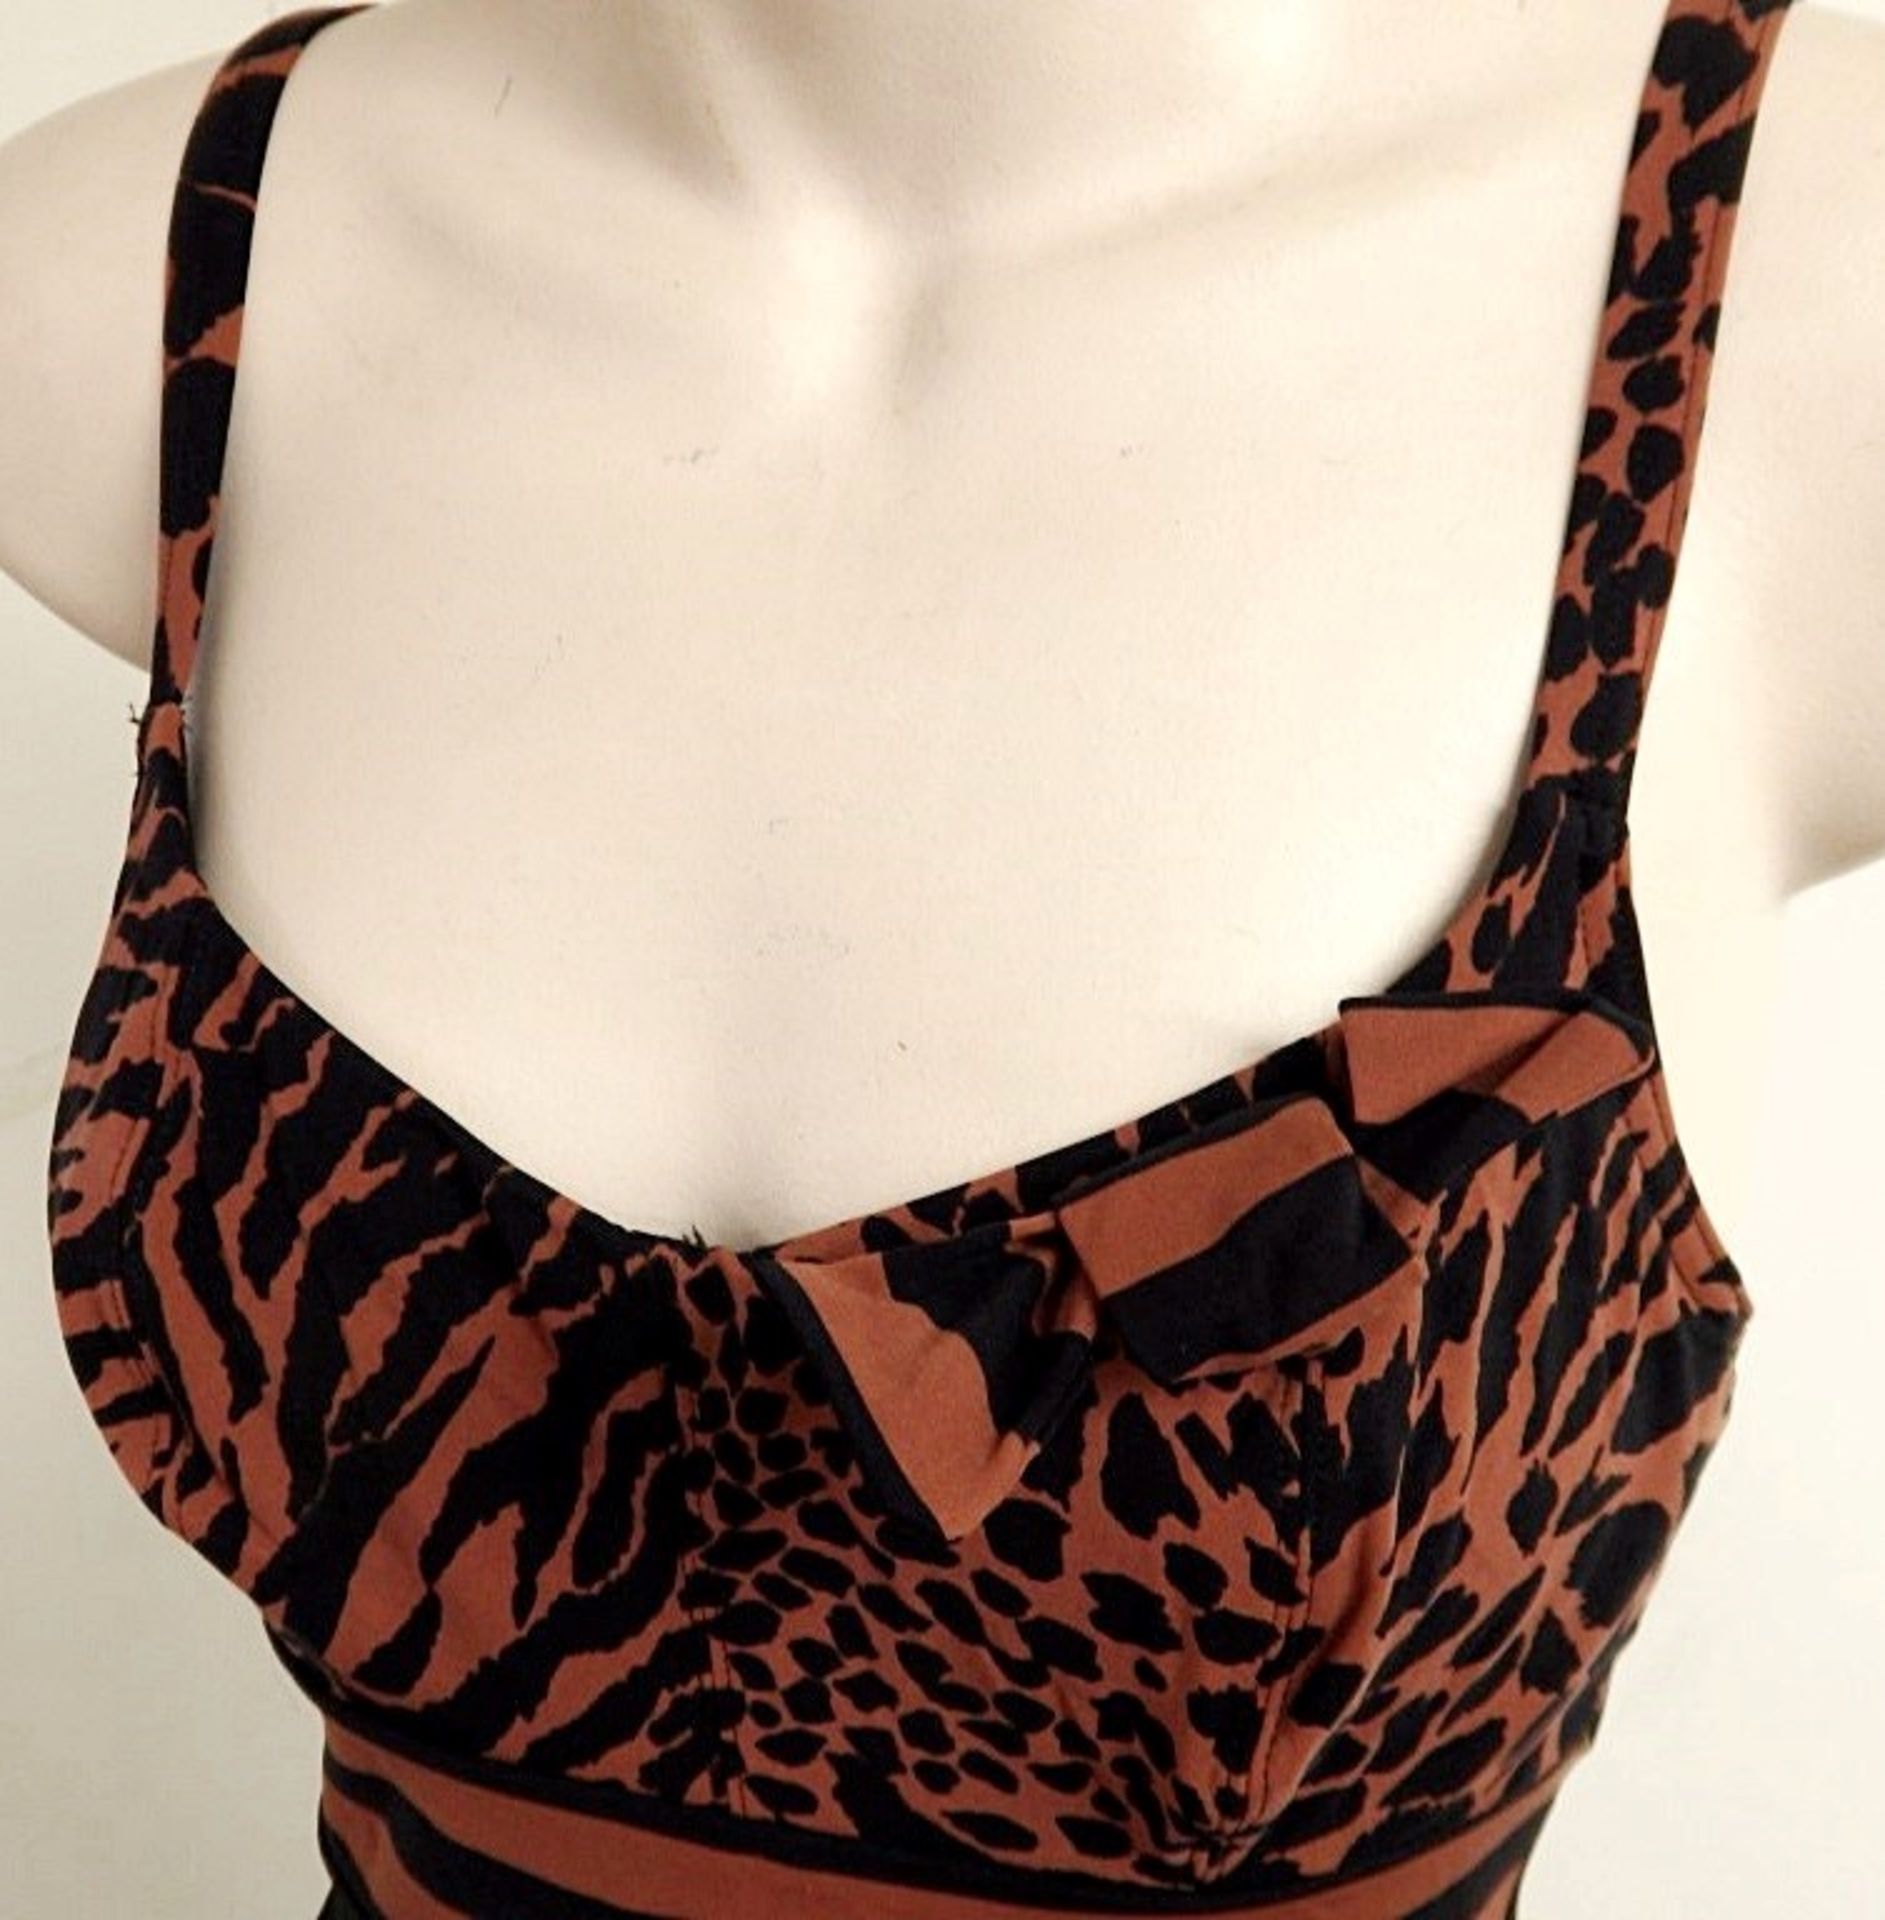 1 x Rasurel - Black/Tan Leopard and Stripe - Bahia Swimsuit - R21235 - Size 2C - UK 32 - Fr 85 - - Image 6 of 7